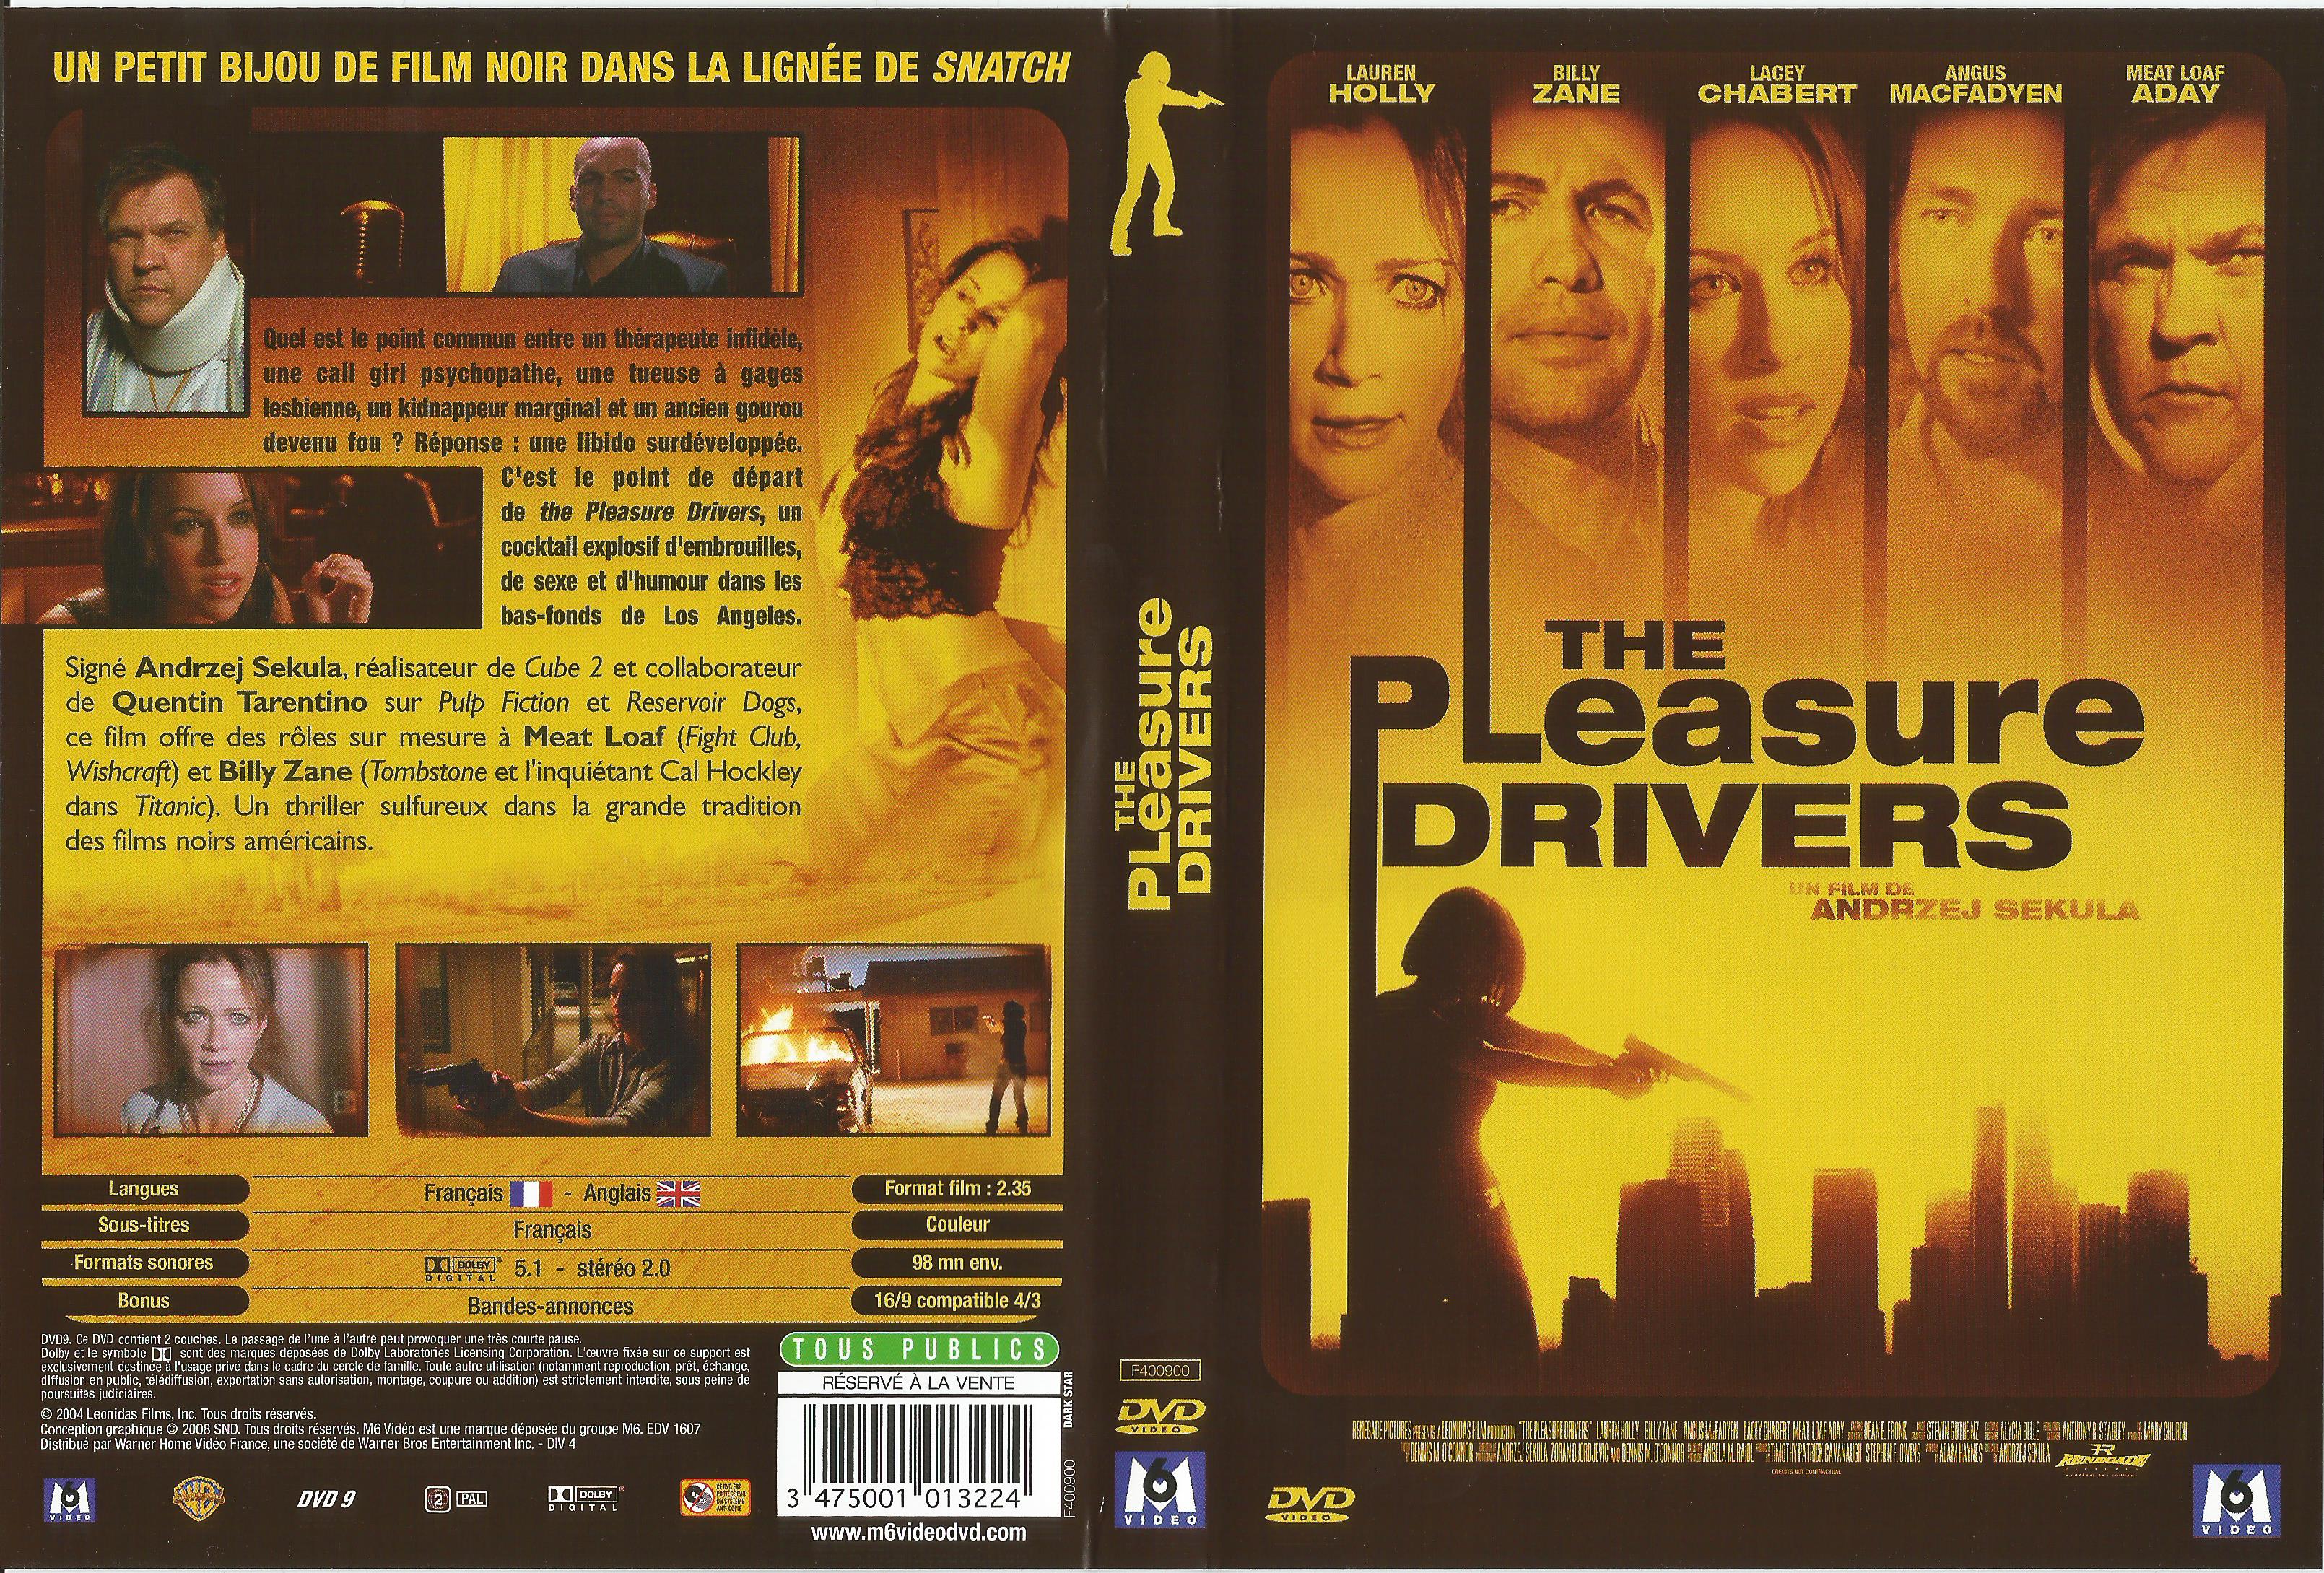 Jaquette DVD The pleasure drivers